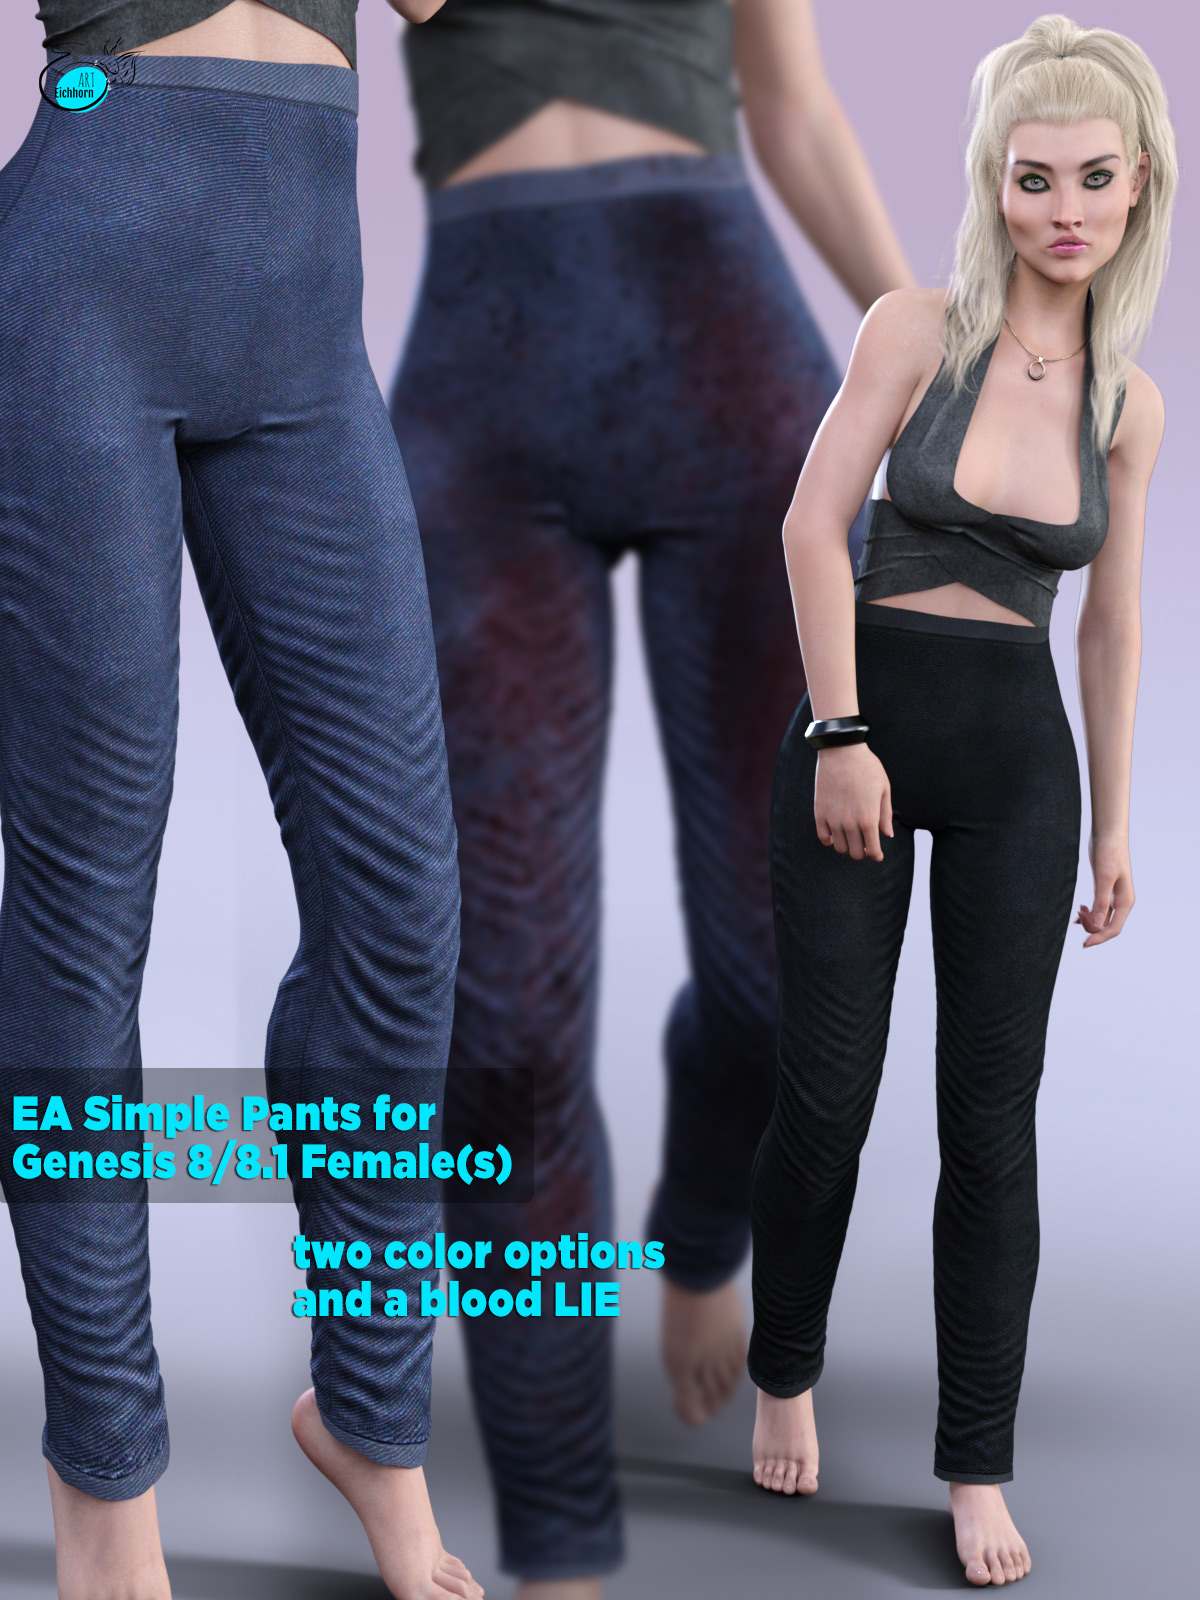 EA Simple Pants for Genesis 8/8.1 Female(s) by EichhornArt on DeviantArt